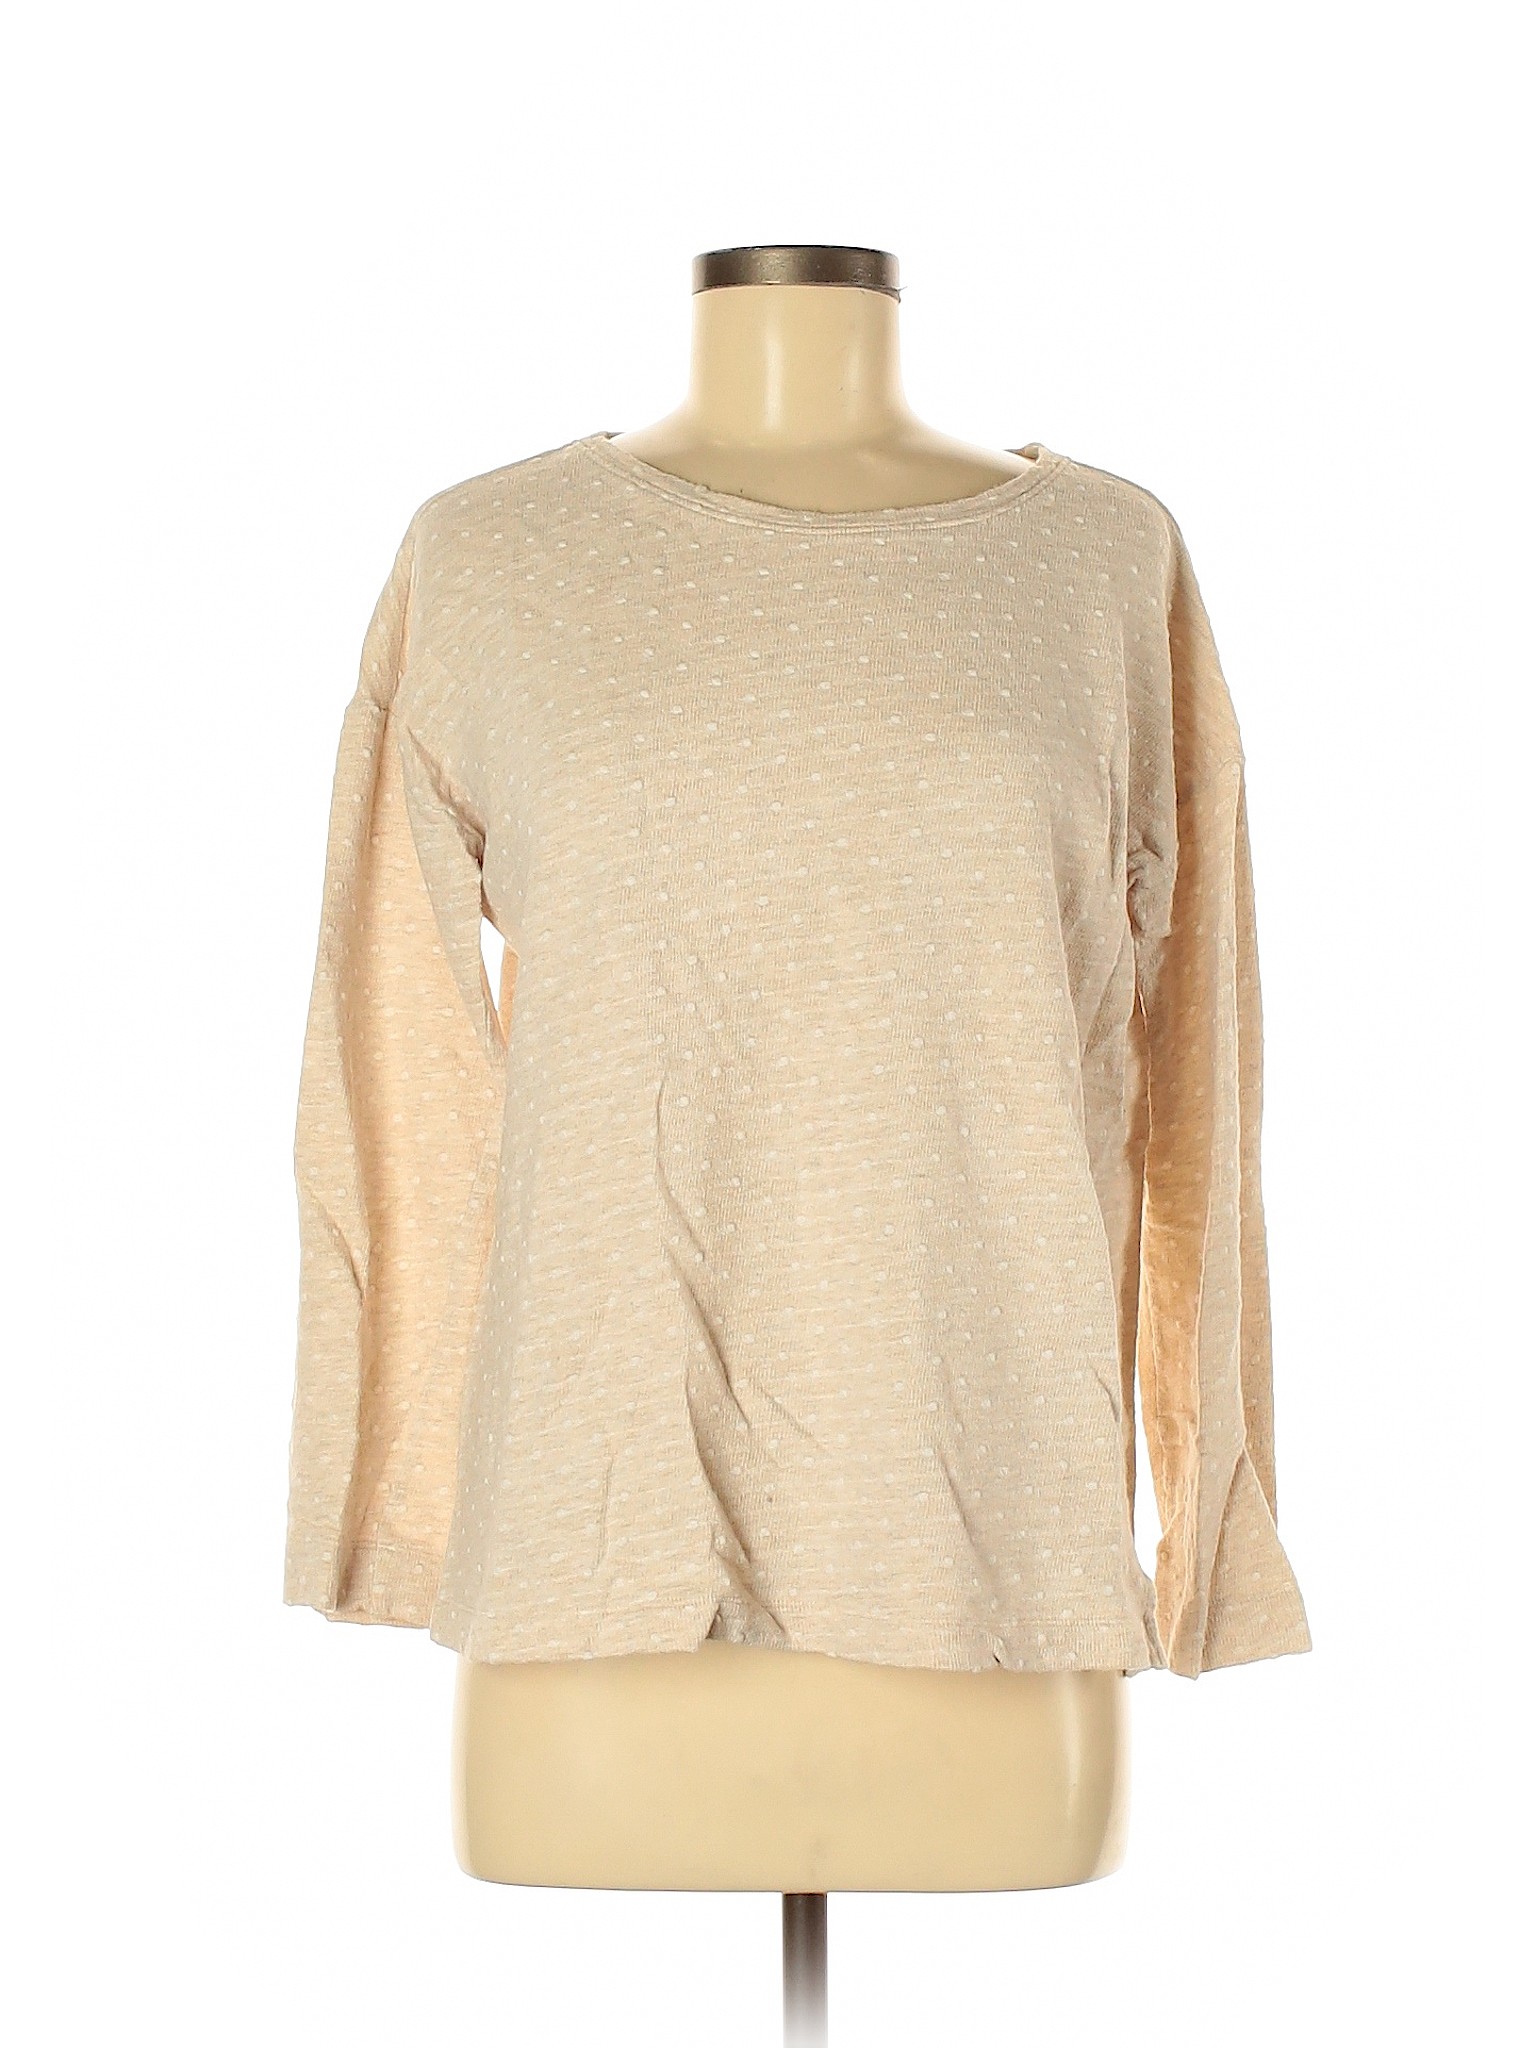 Lou & Grey Women Brown Long Sleeve Top M | eBay